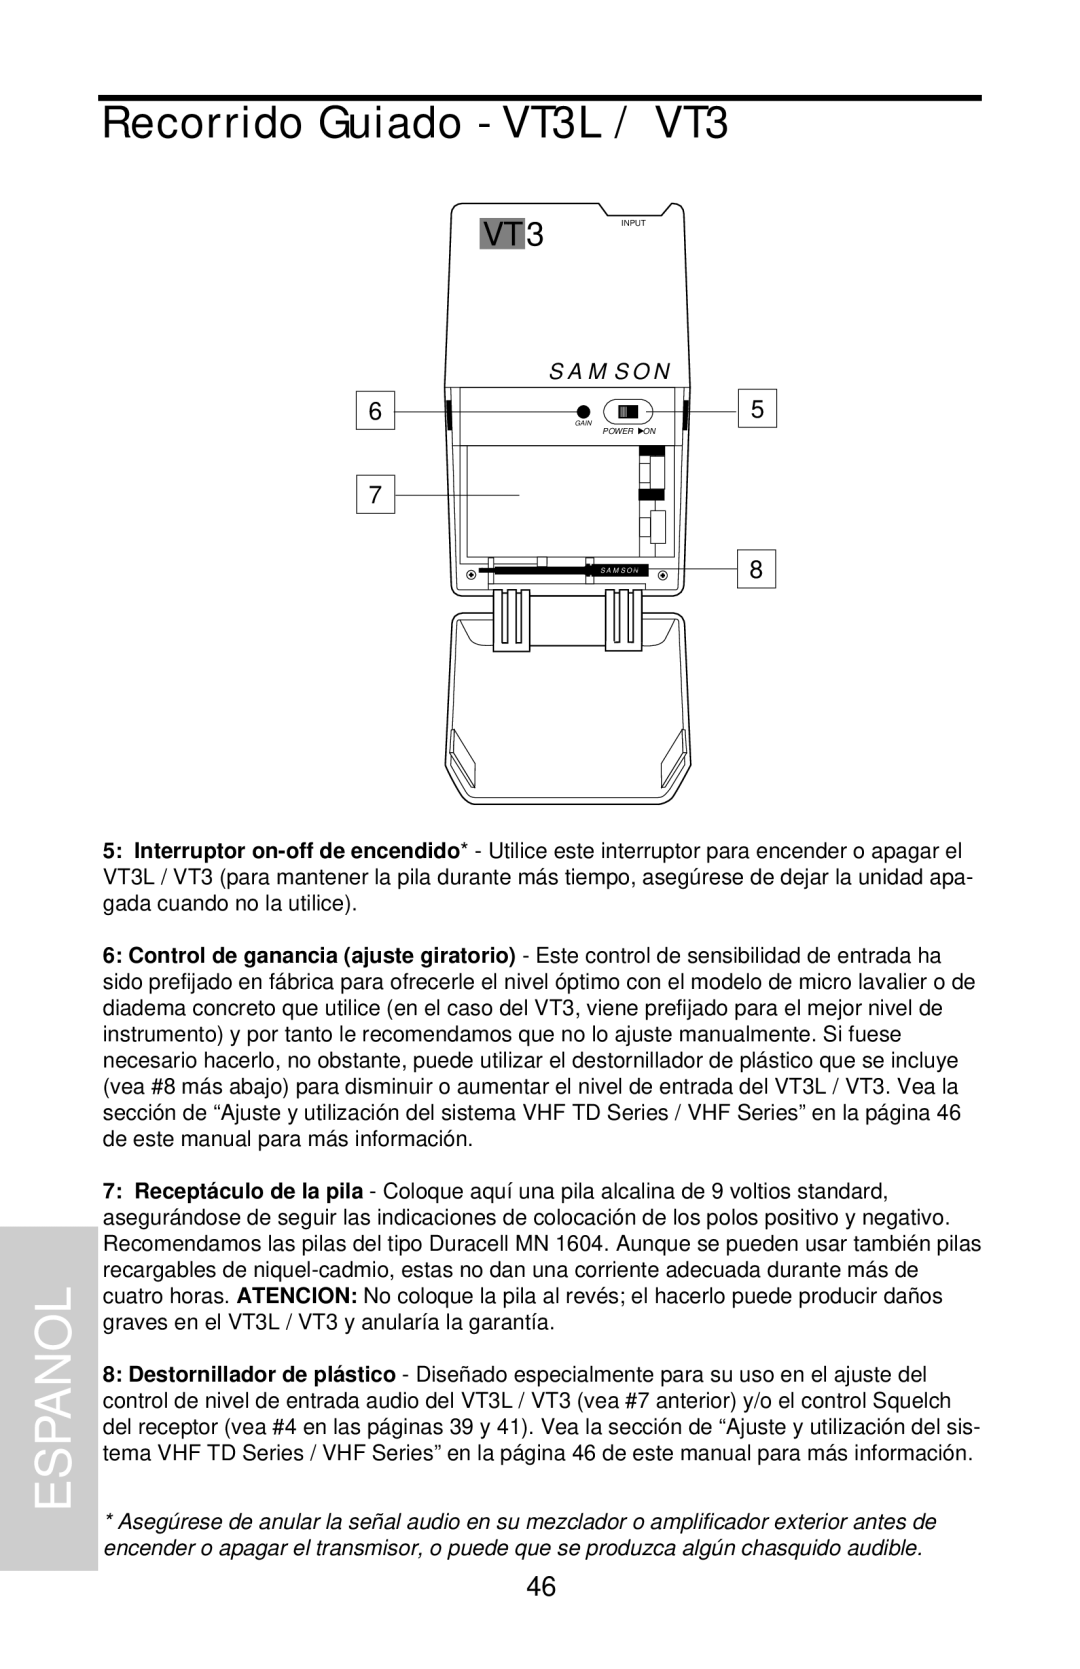 Samson VHF TD Series, VHF Series owner manual Espanol, Recorrido Guiado - VT3L / VT3, Samson 